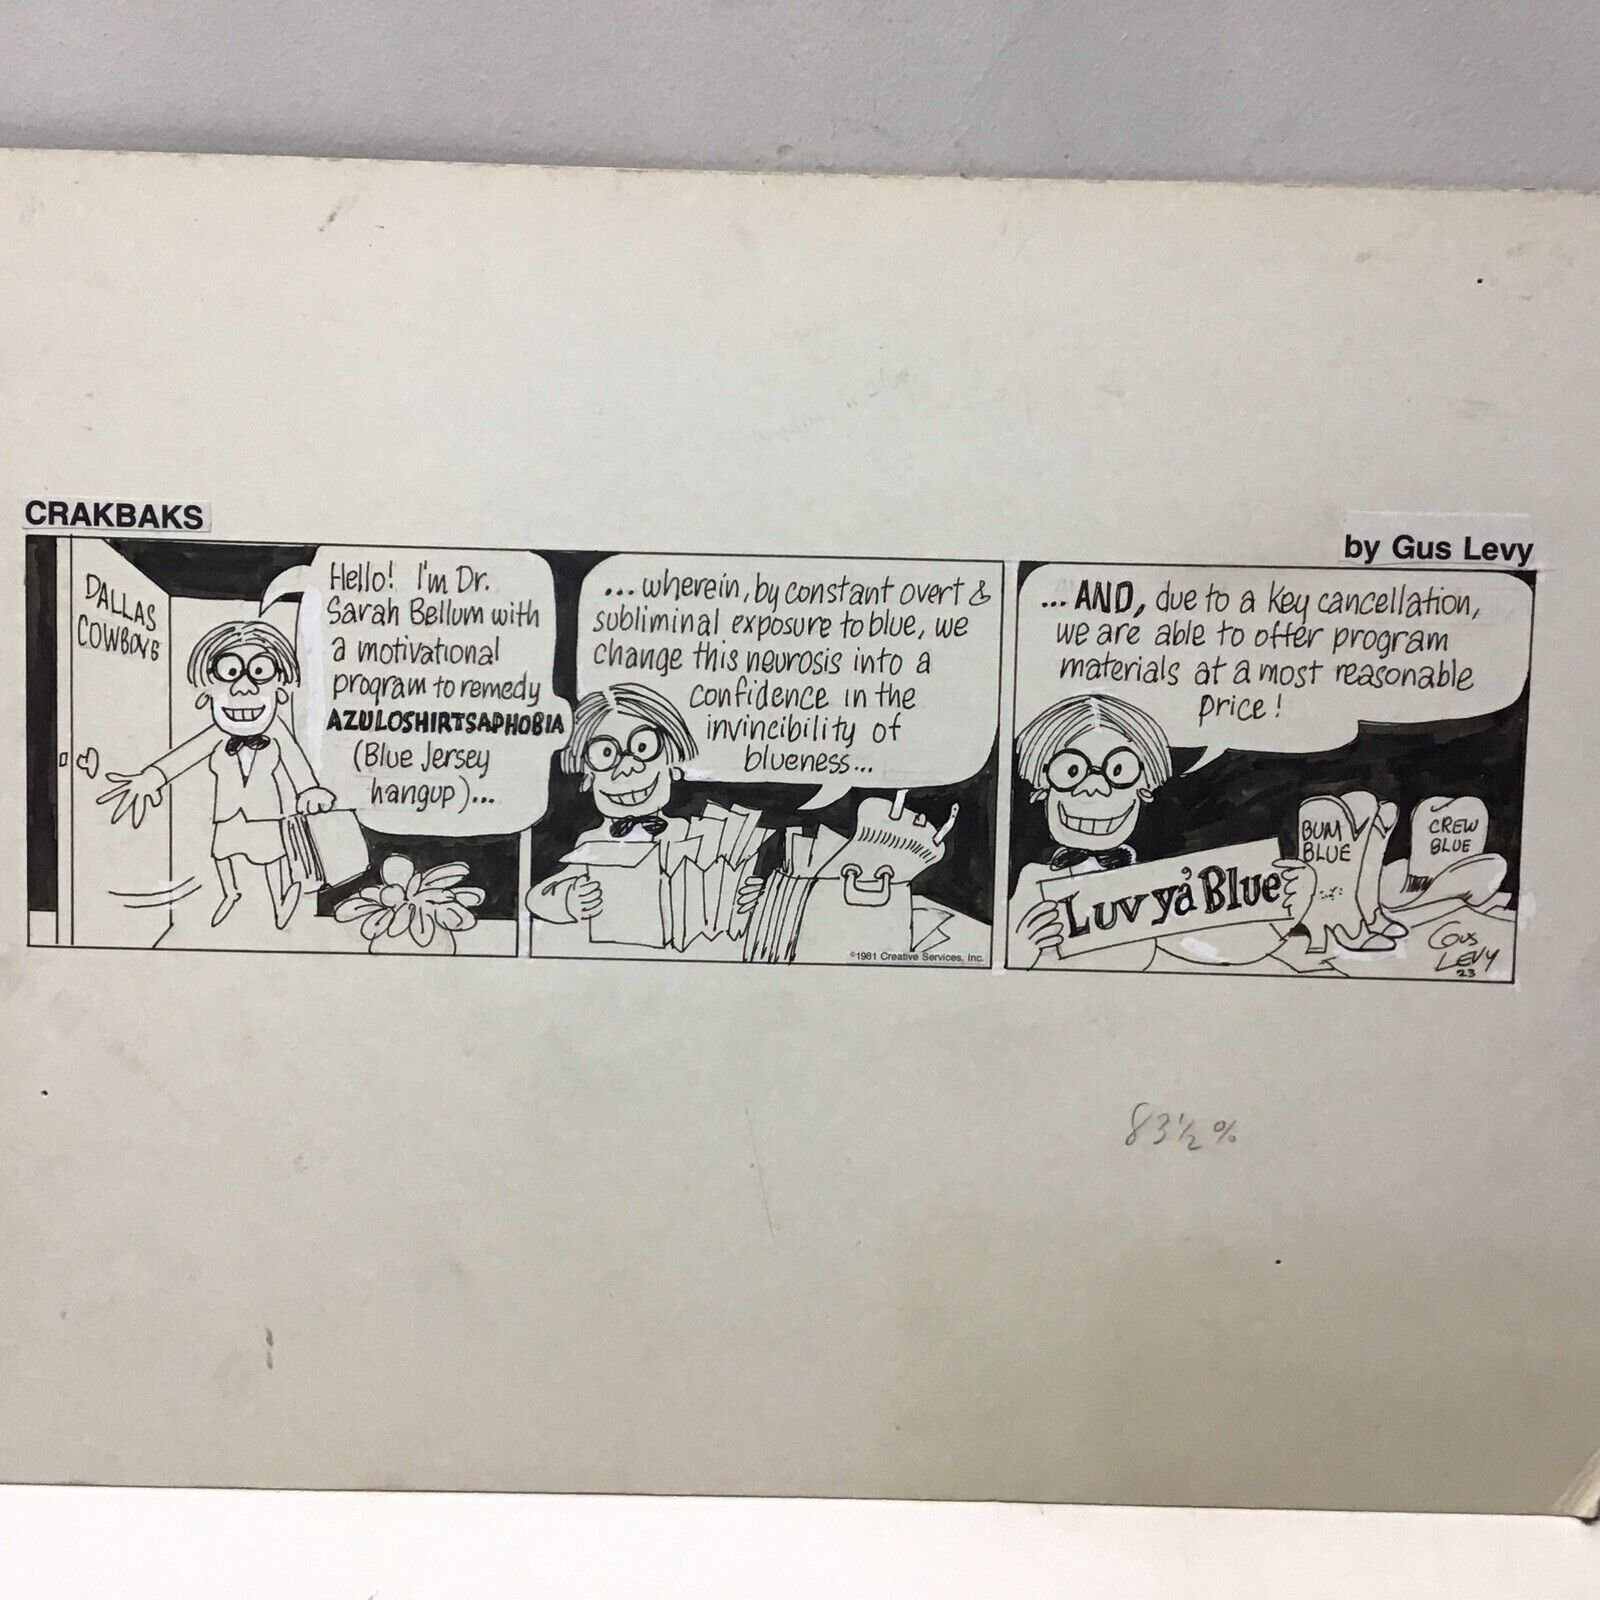 1981 -Crakbaks- Hand Drawn Comic Strip By Gus Levy Pertaining To Dallas Cowboys